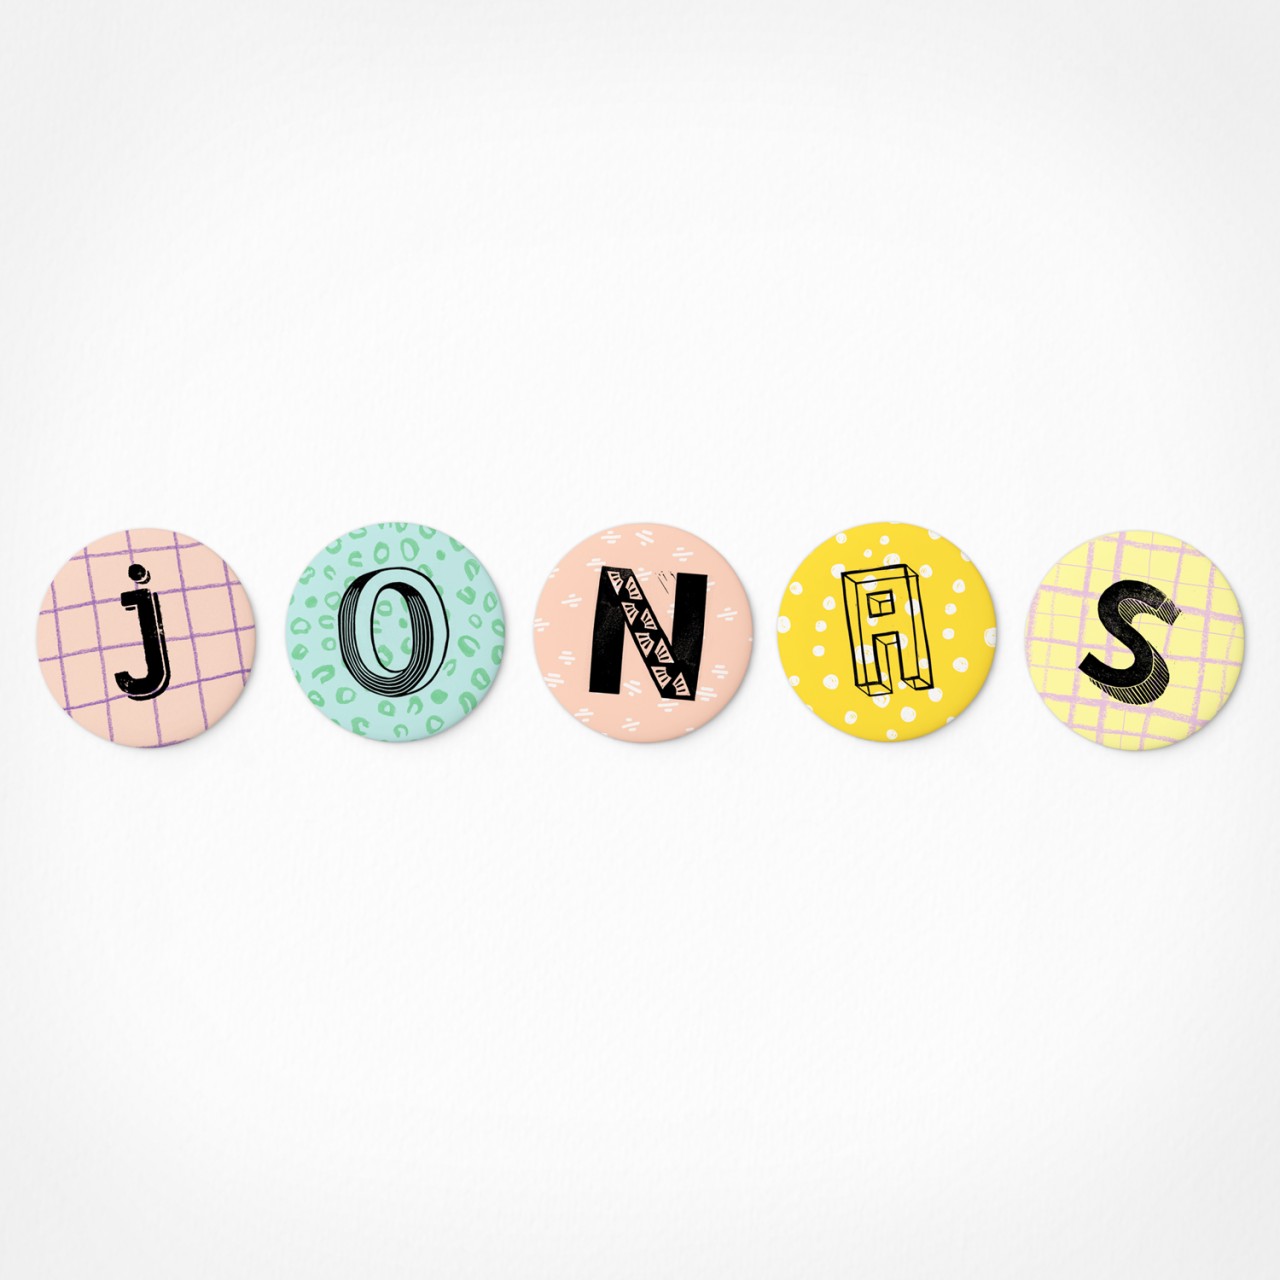 Jonas | Magnetbuchstaben Set | 5 Magnete